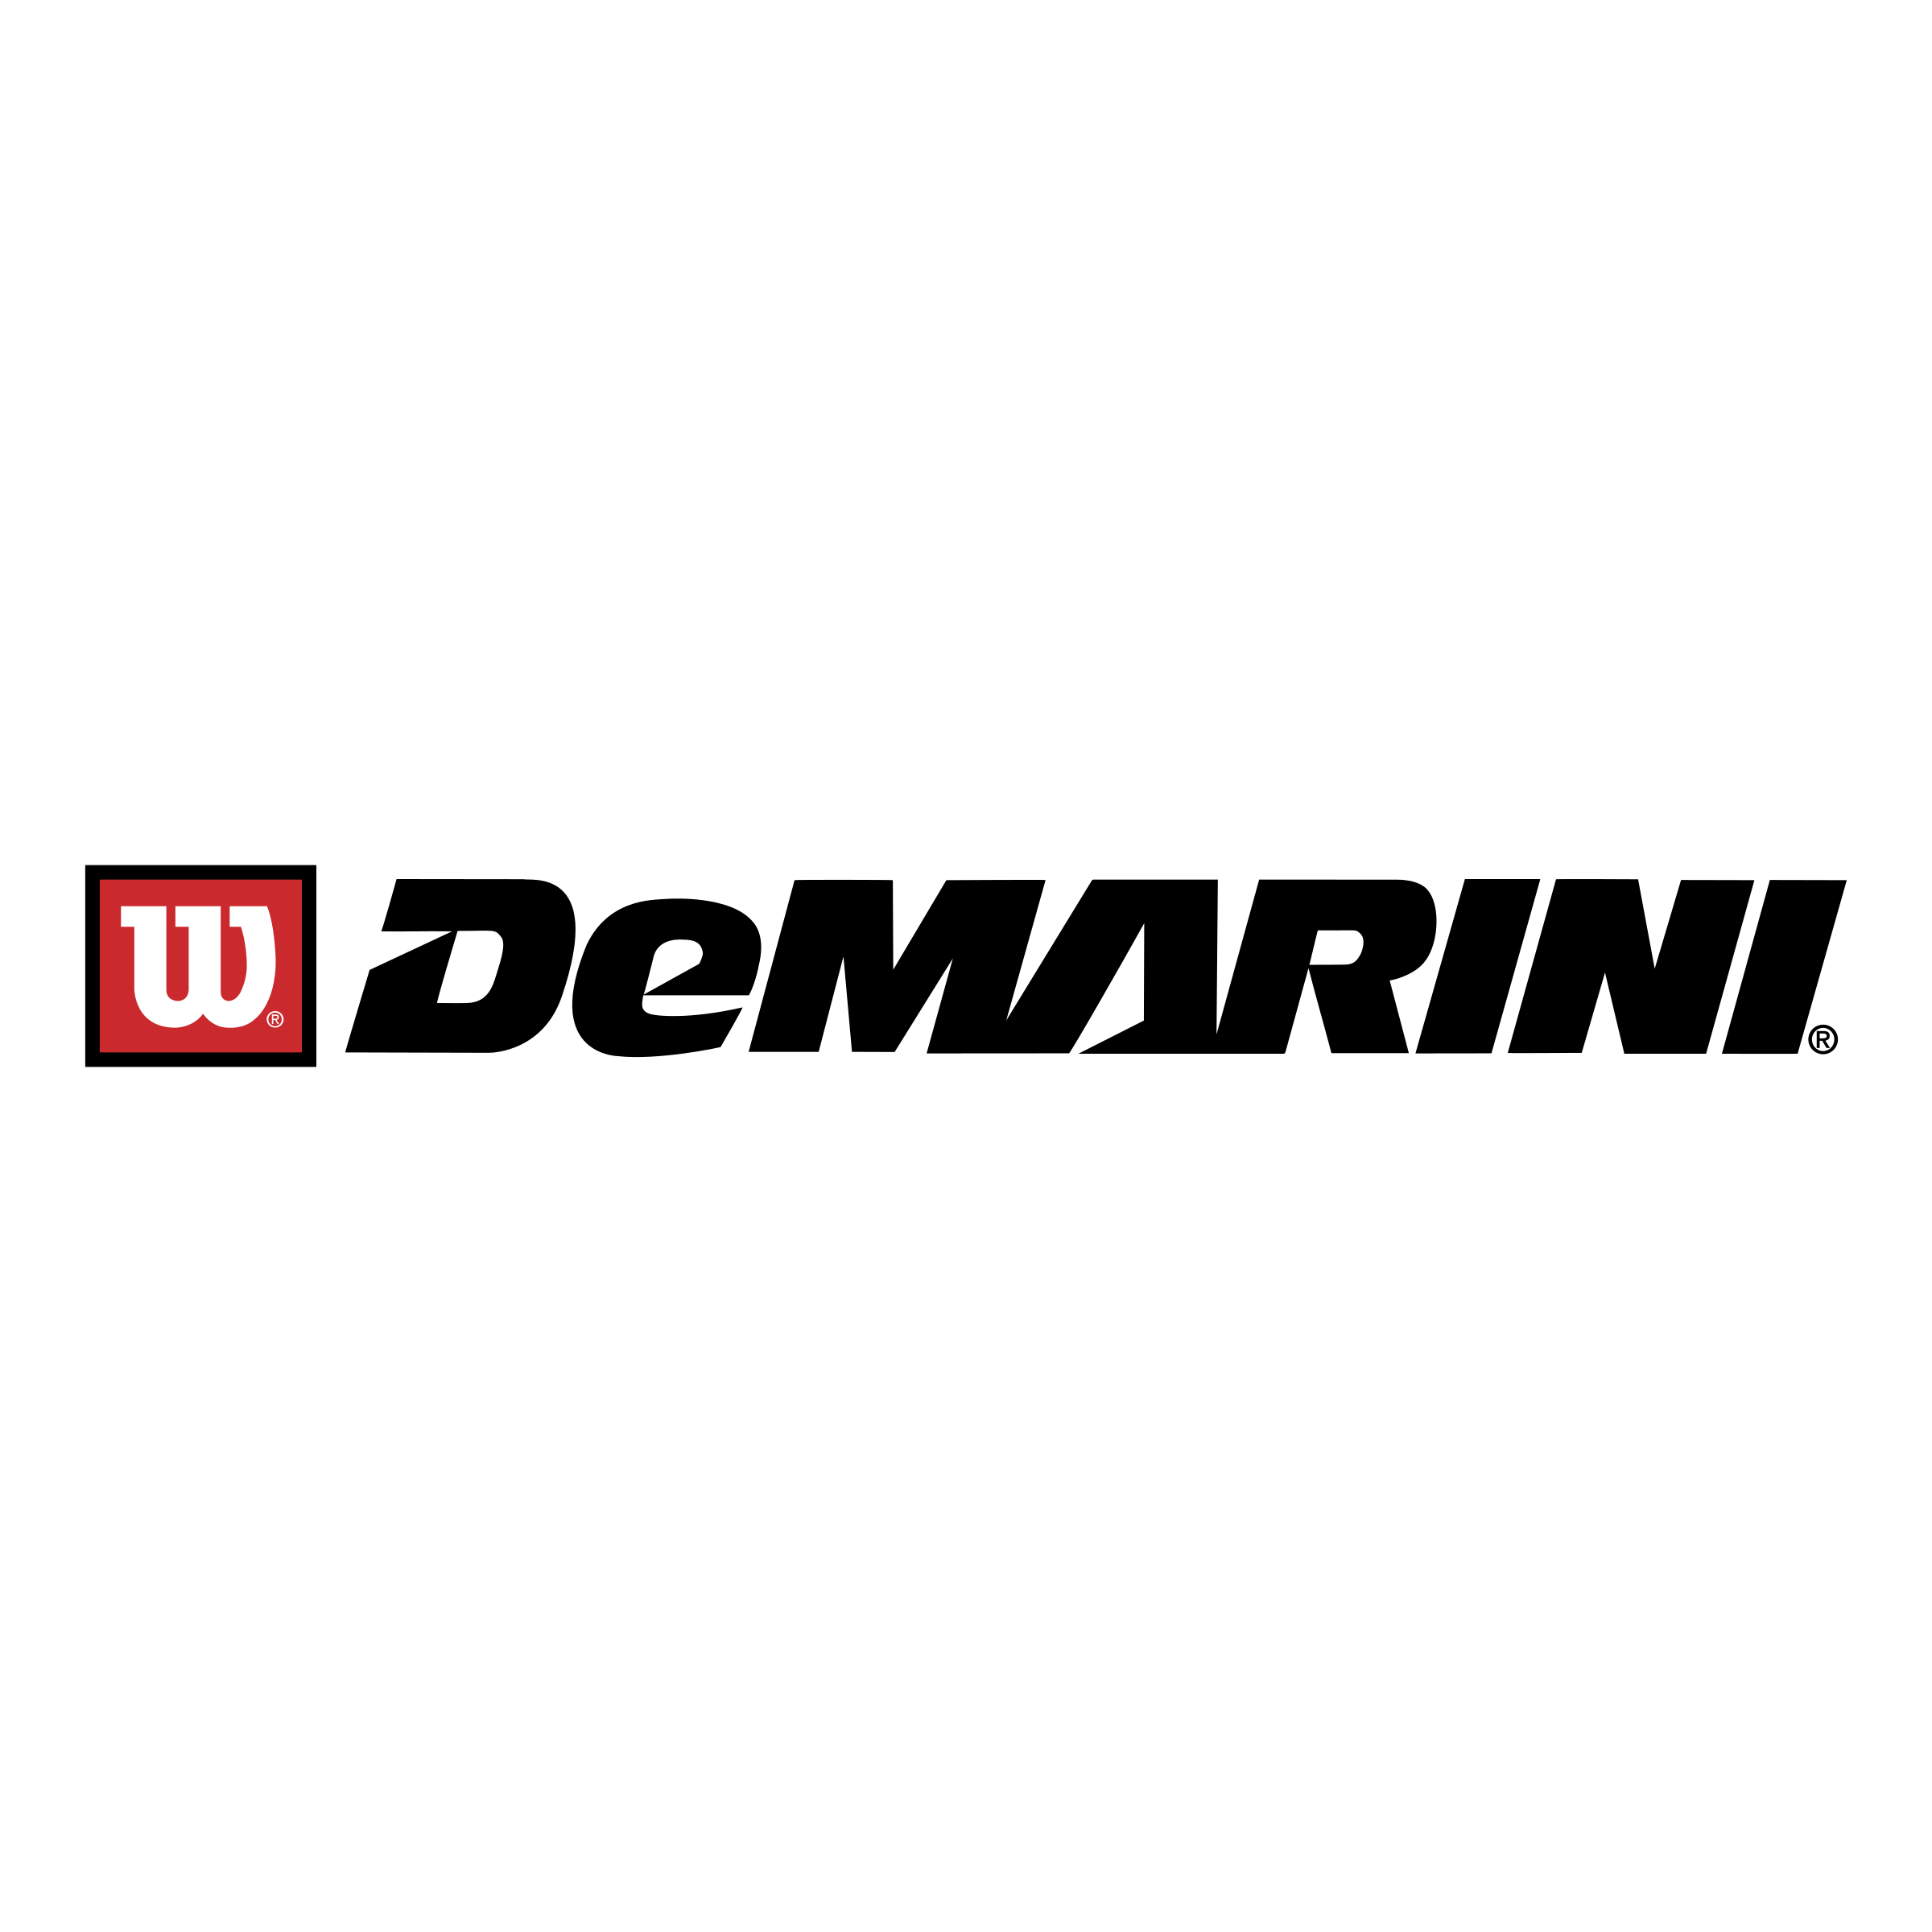 DeMarini Logo - DeMarini Logo PNG Transparent & SVG Vector - Freebie Supply